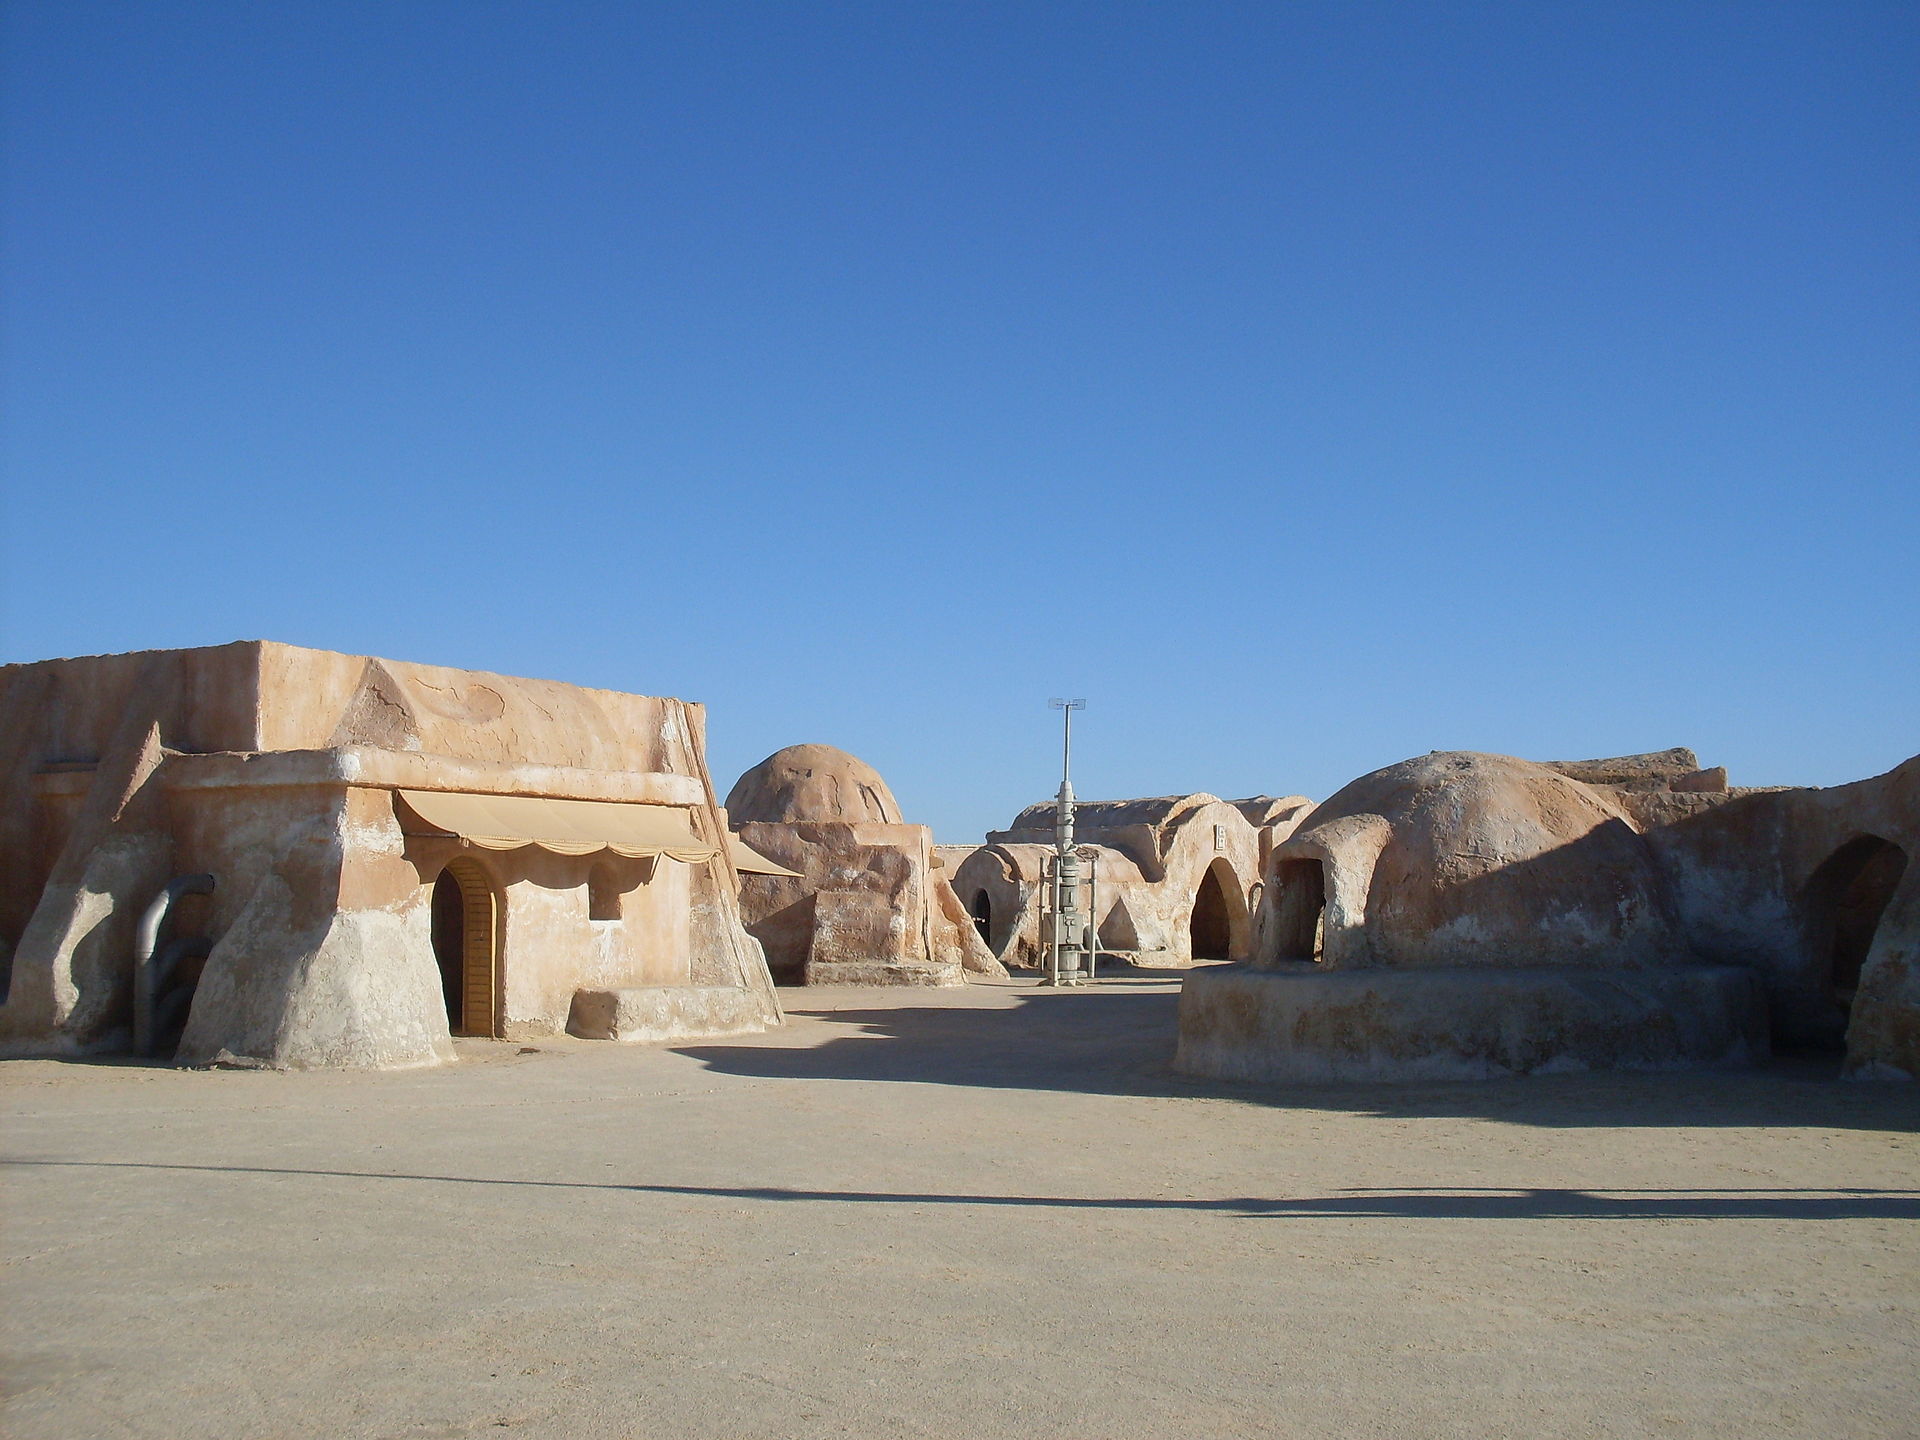 'Star Wars' filming location Mos Espa near Tozeur, Tunisia. Image courtesy of Wikimedia Commons